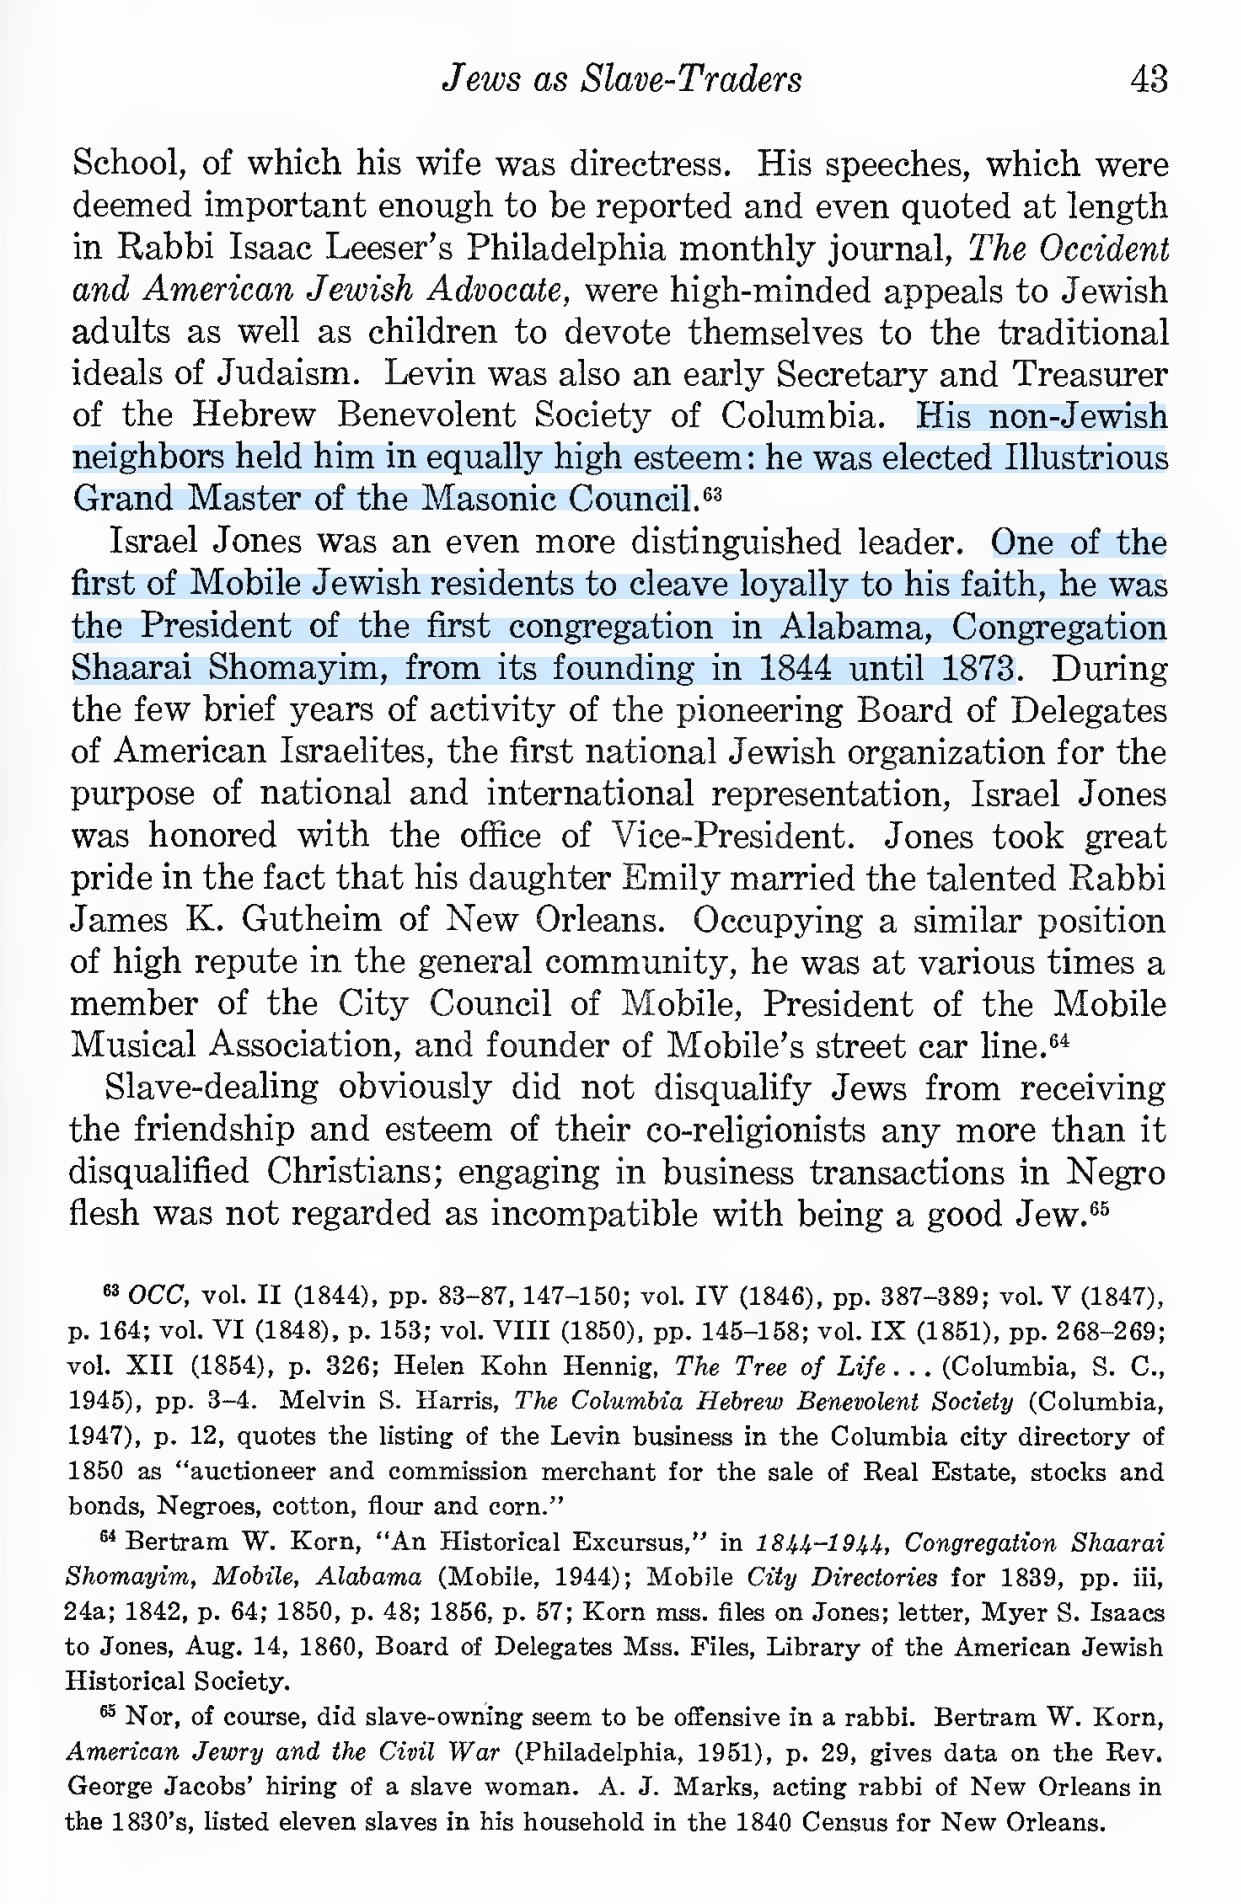 Freemasonic Jew slave owners